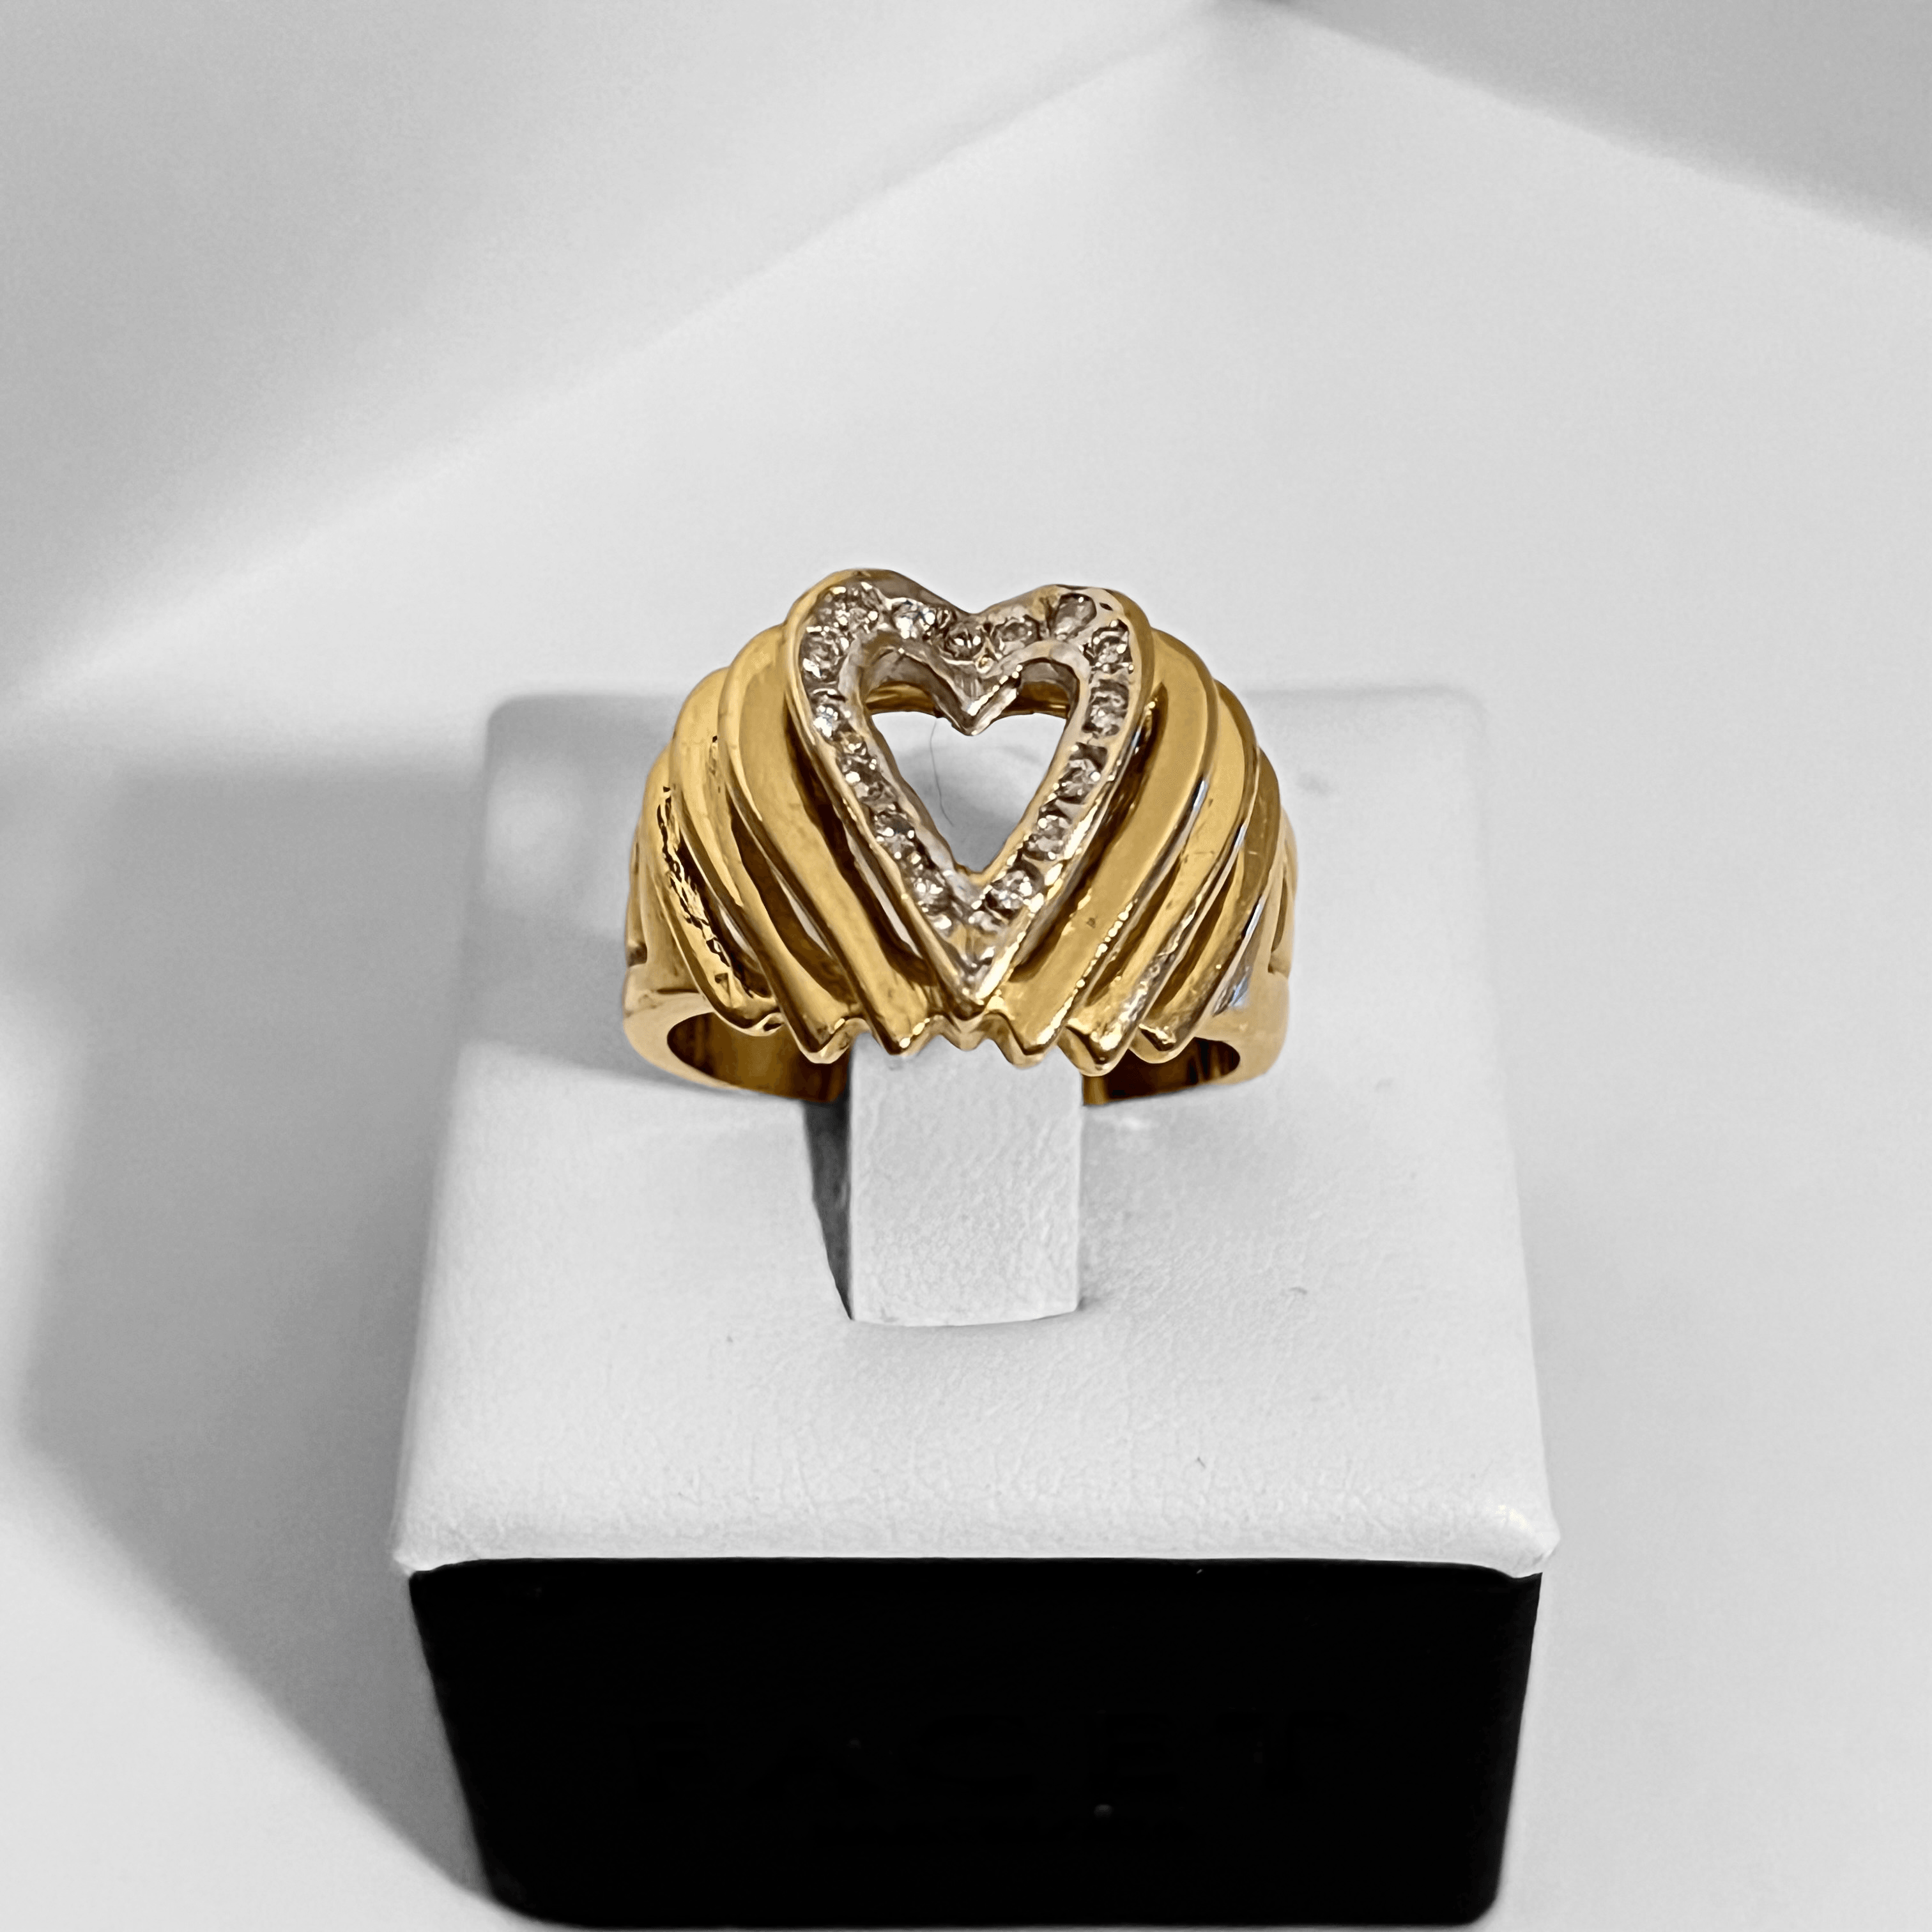 3D Raised Diamond Heart Ring - Michelle the Jeweler 